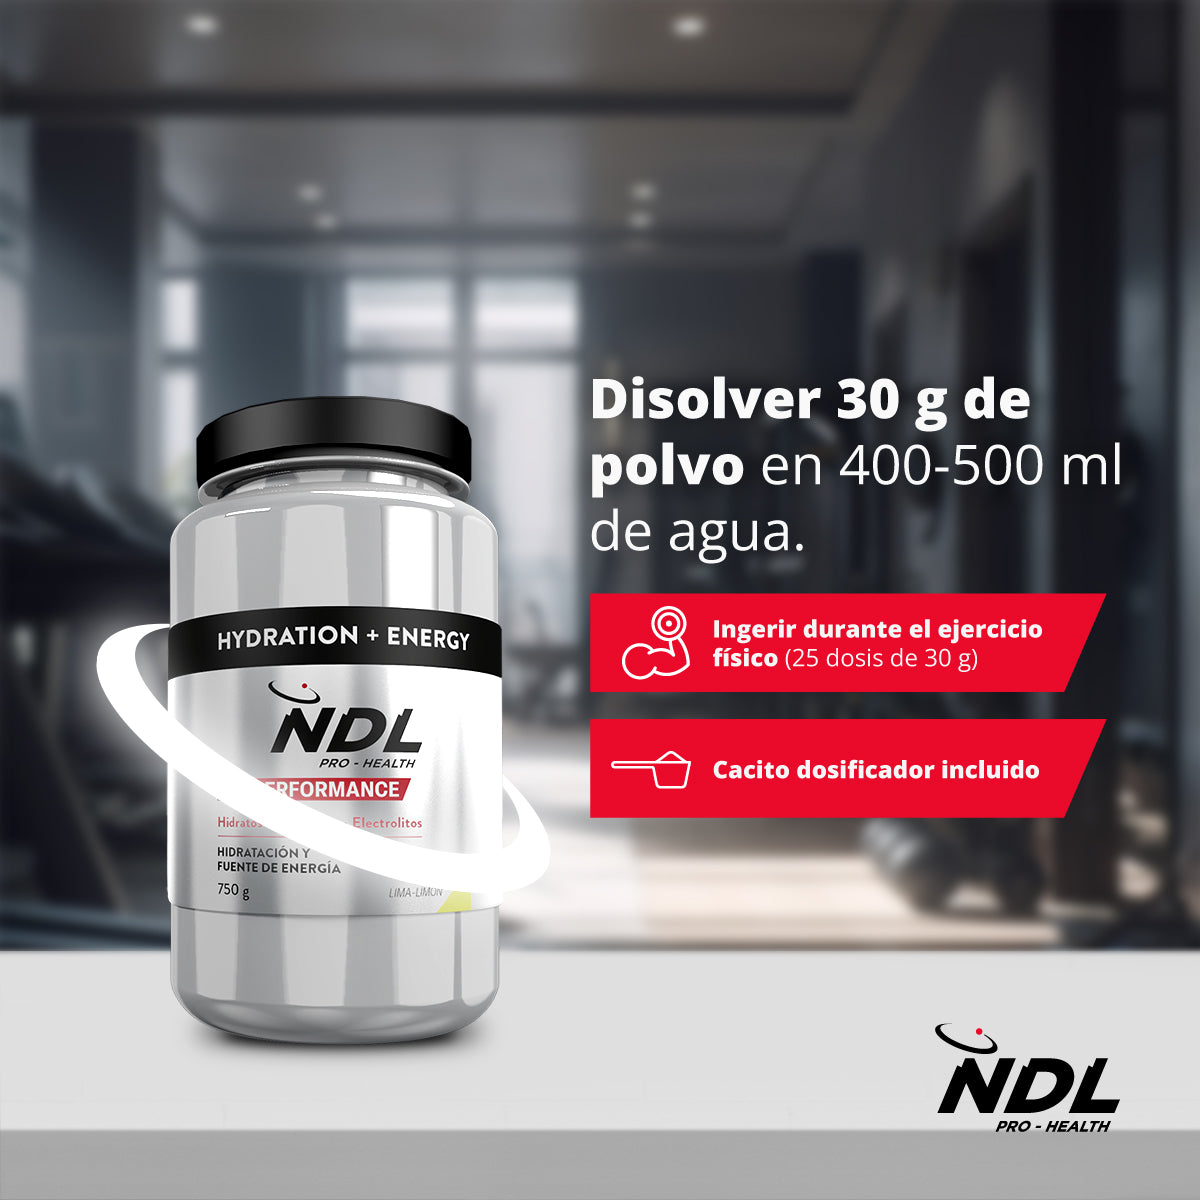 NDL Pro-Health Hydration & Energy Lime - Lemon flavour, 750g